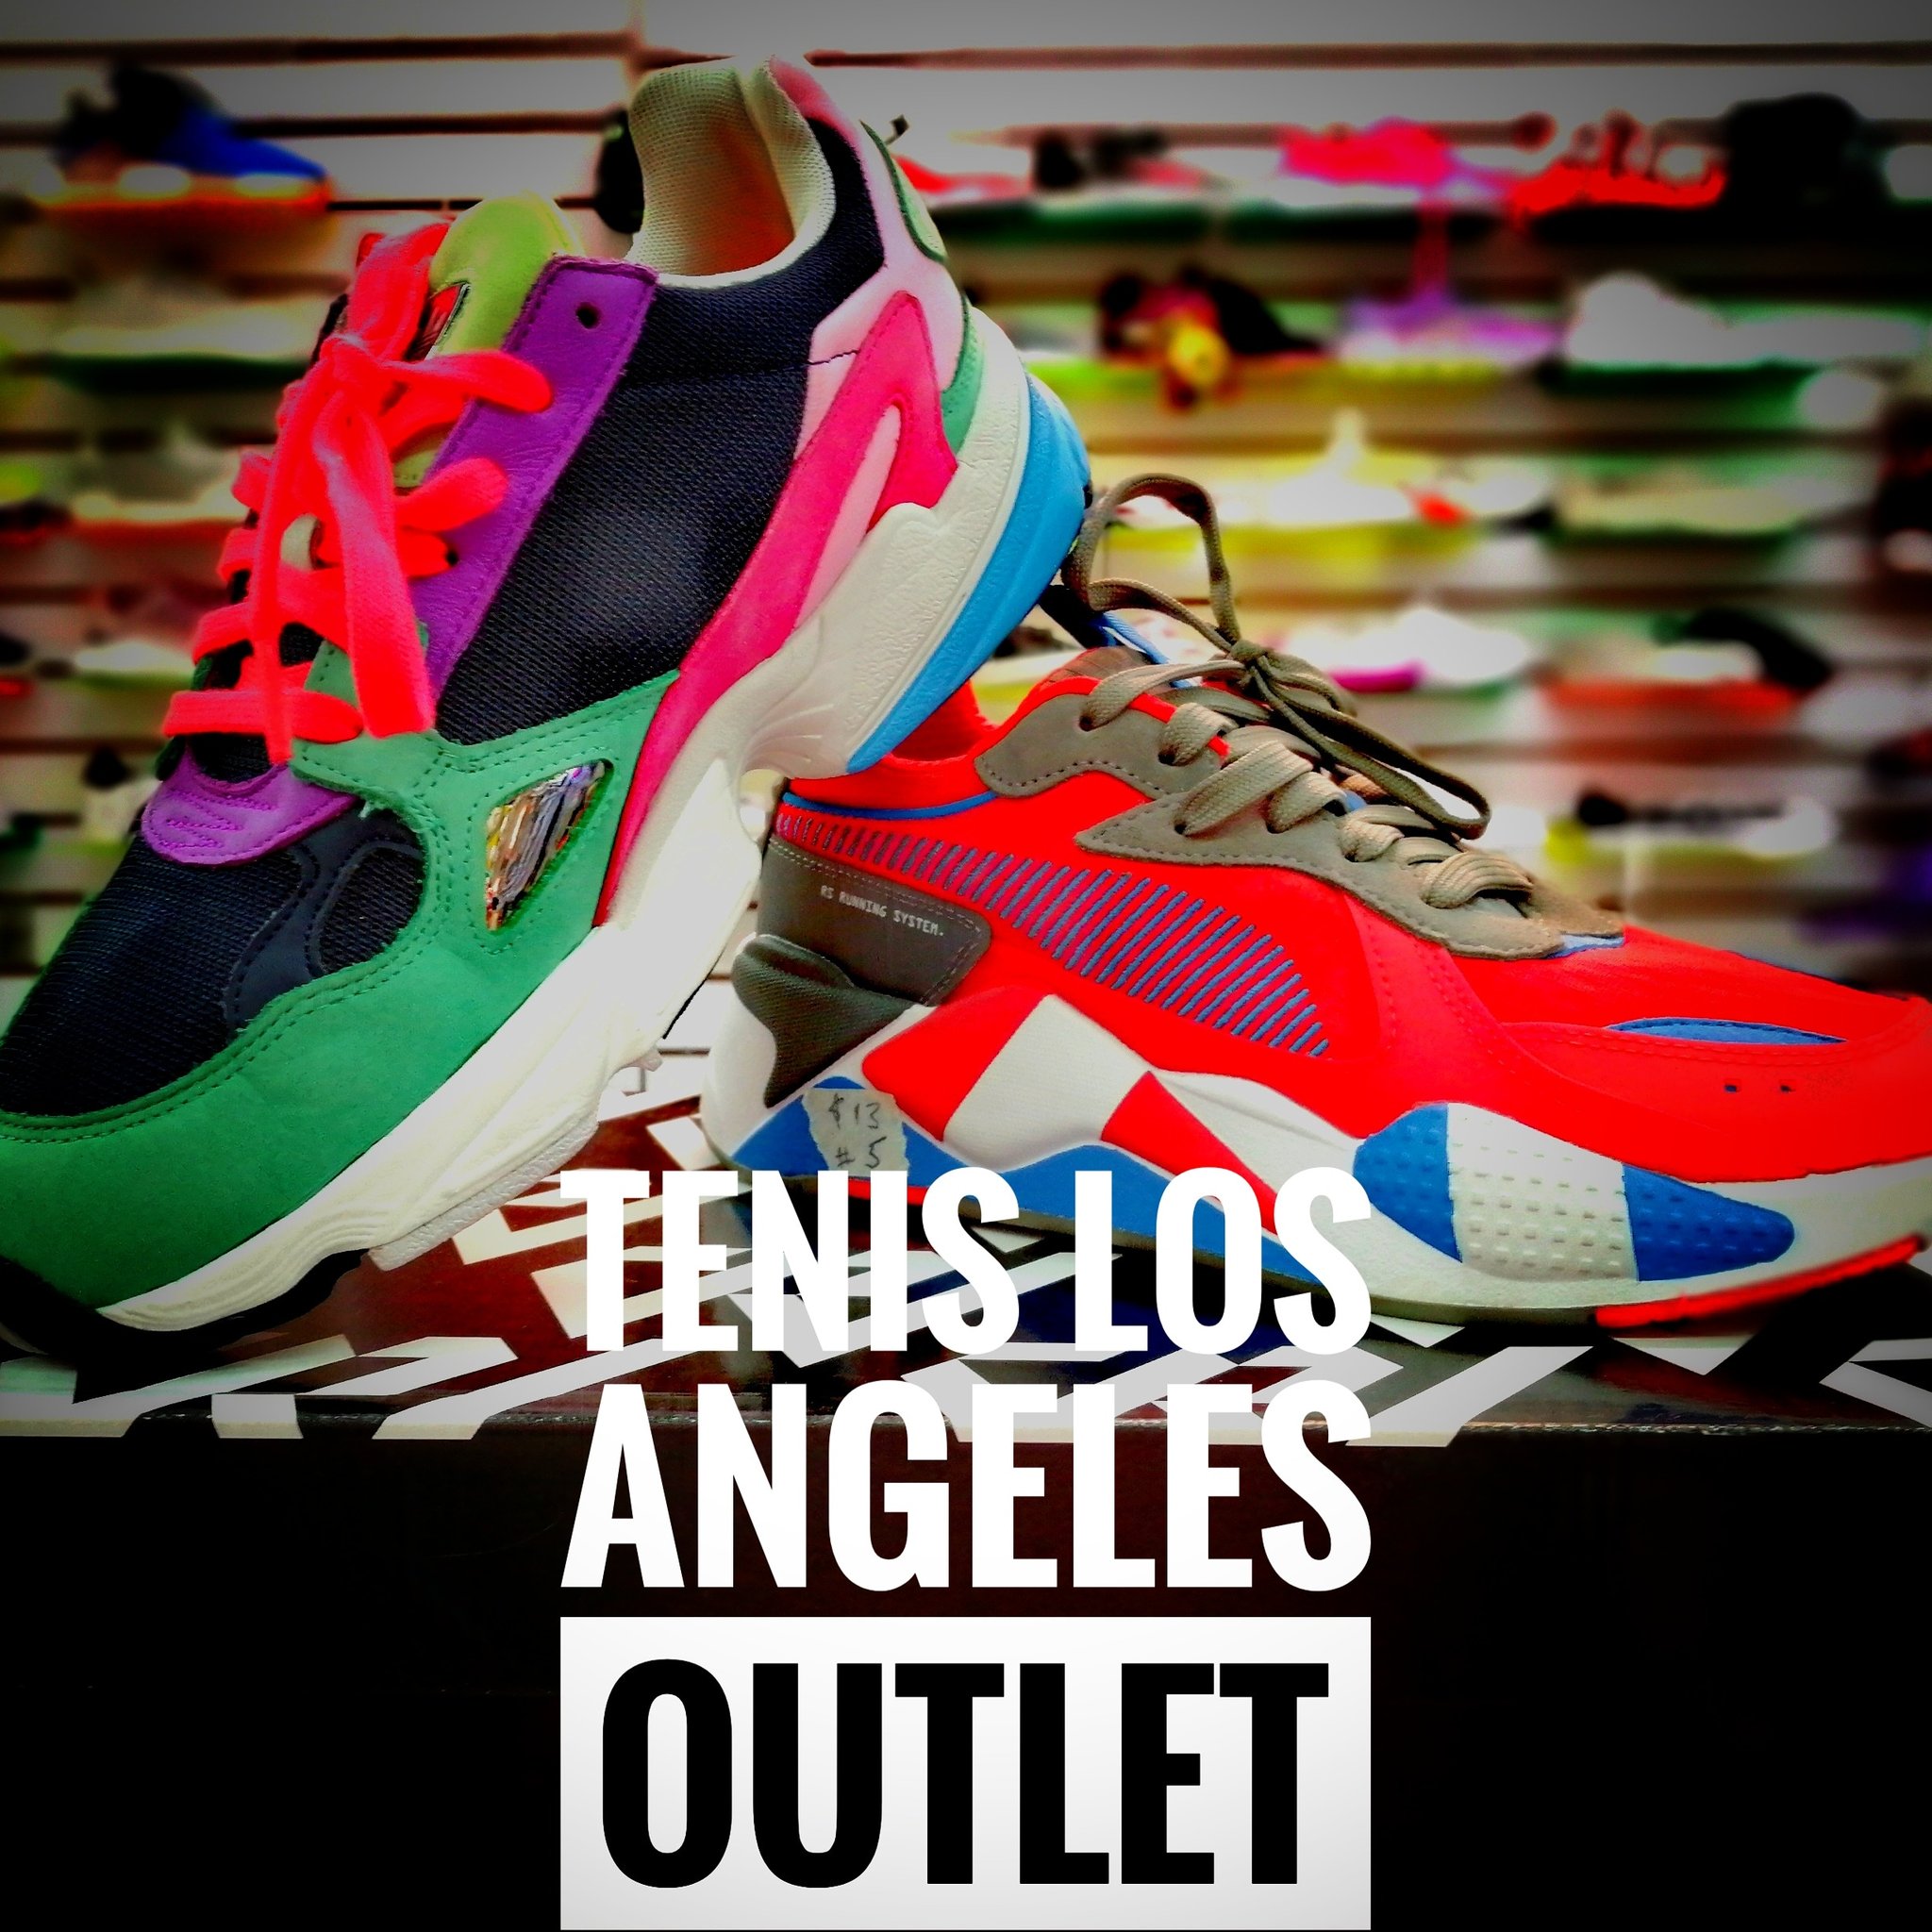 martillo Cliente búnker Tenis Los Angeles Outlet (@tenislaot) / Twitter